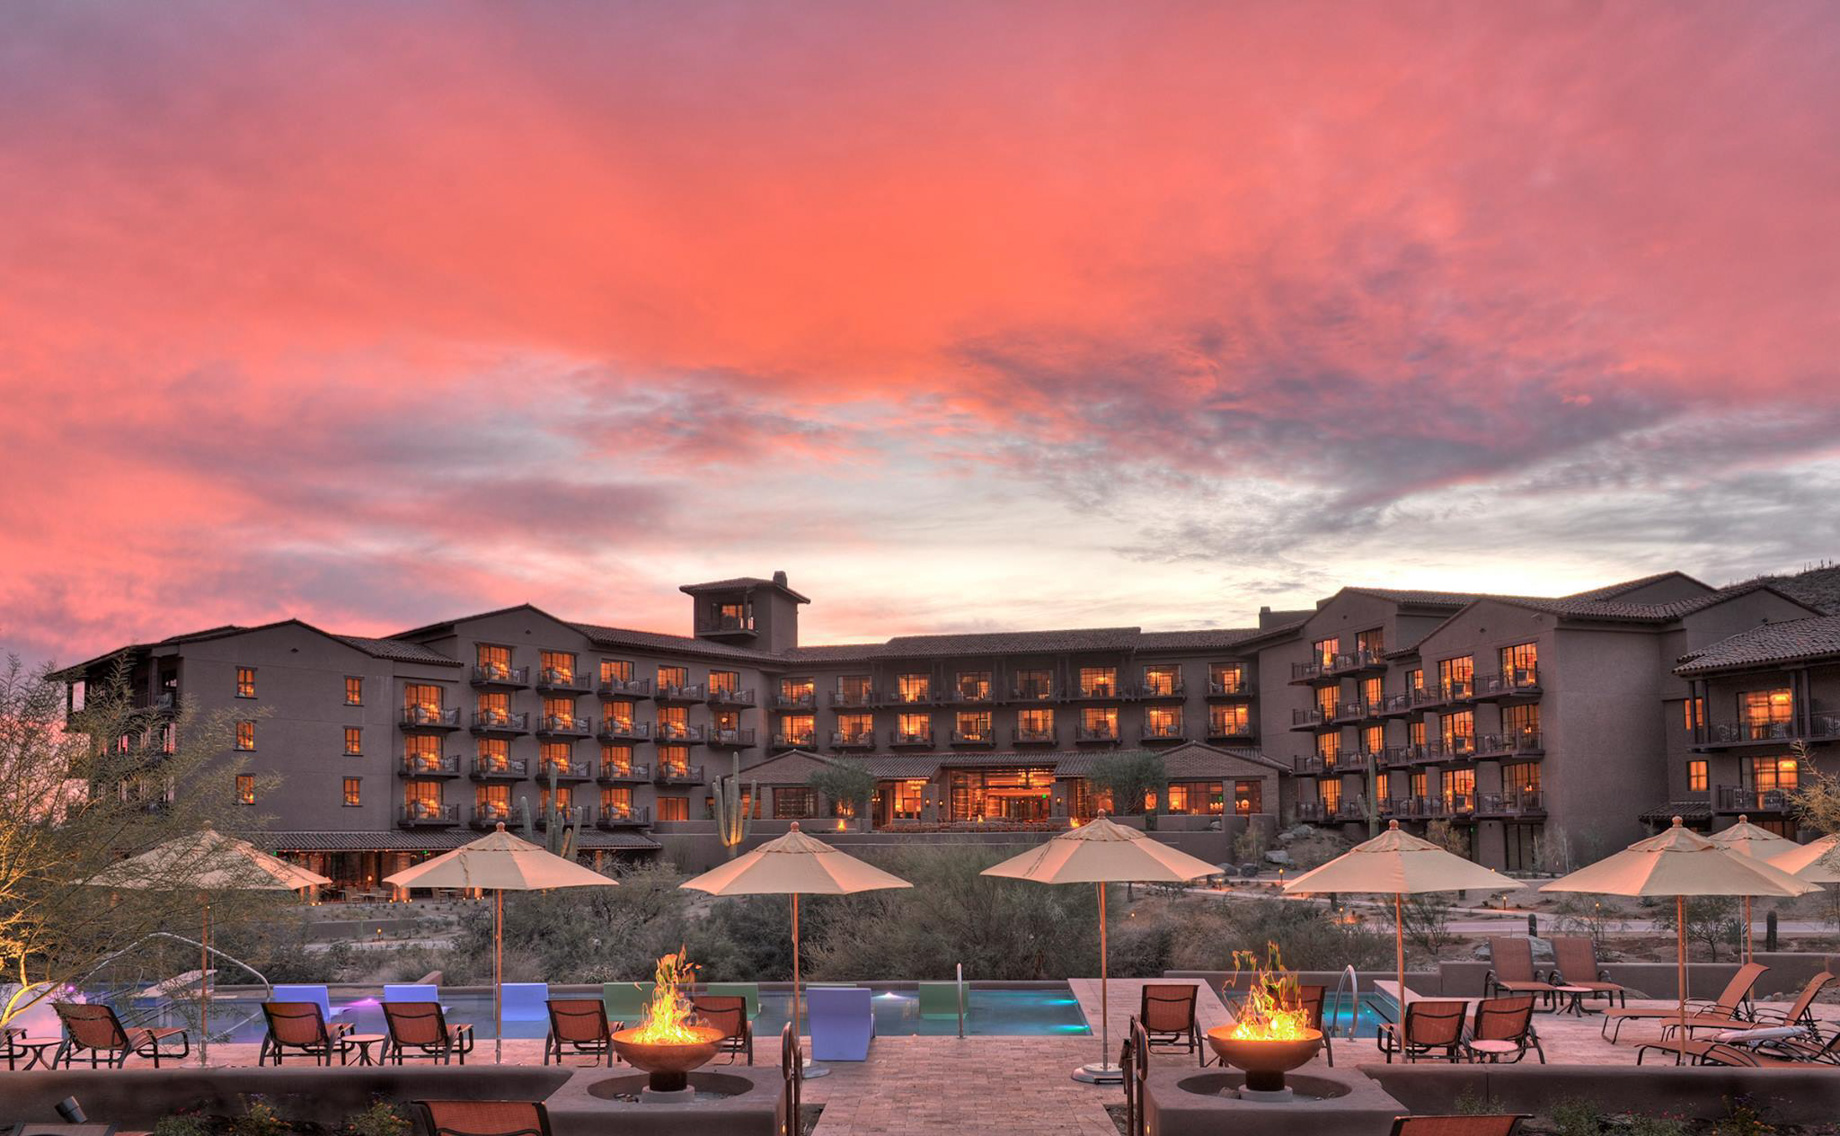 The Ritz-Carlton, Dove Mountain Resort - Marana, AZ, USA - Exterior Sunset